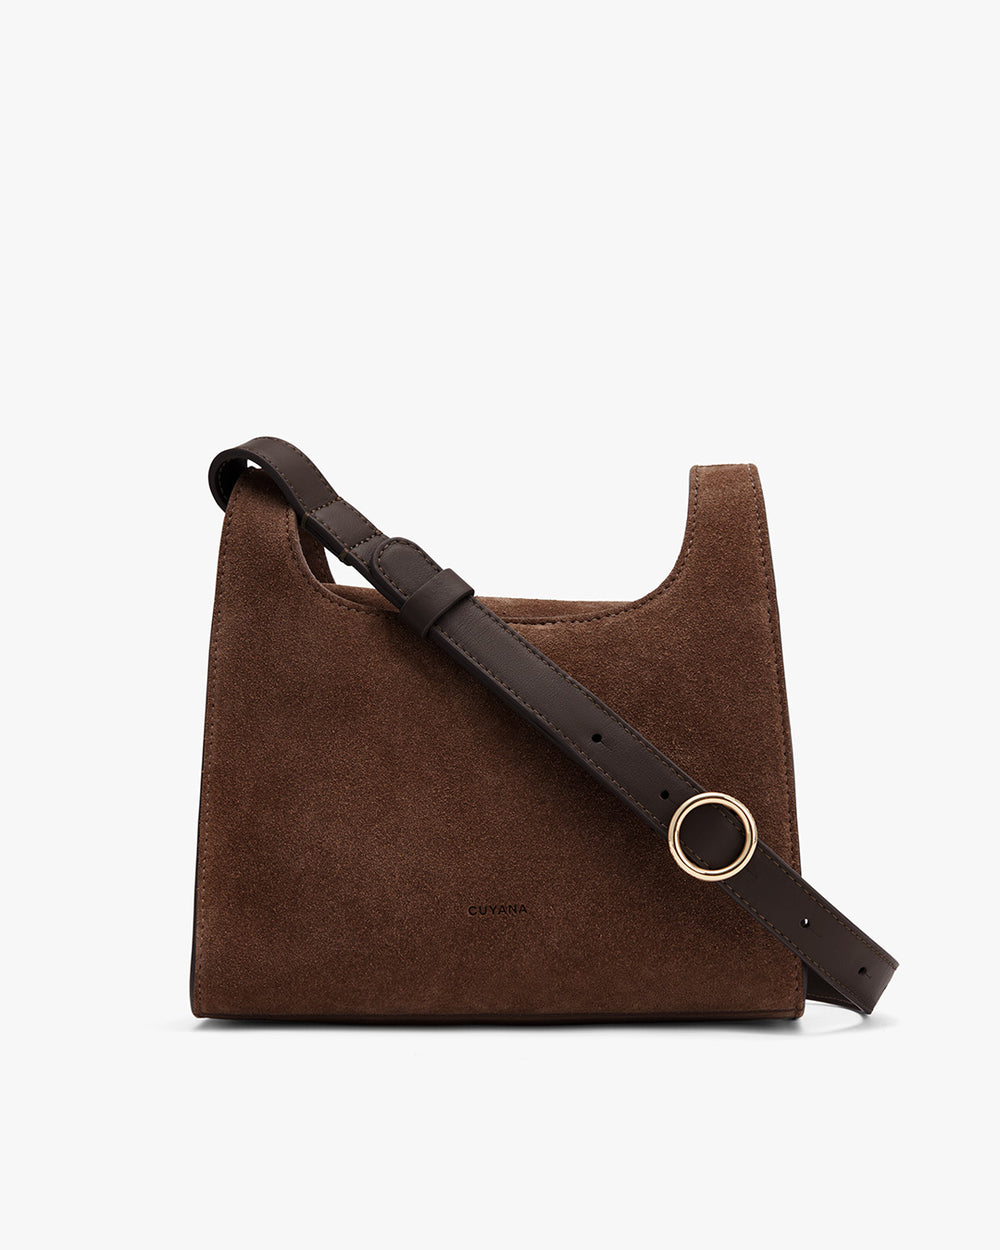 Shoulder bag with an adjustable strap and metal ring detail.